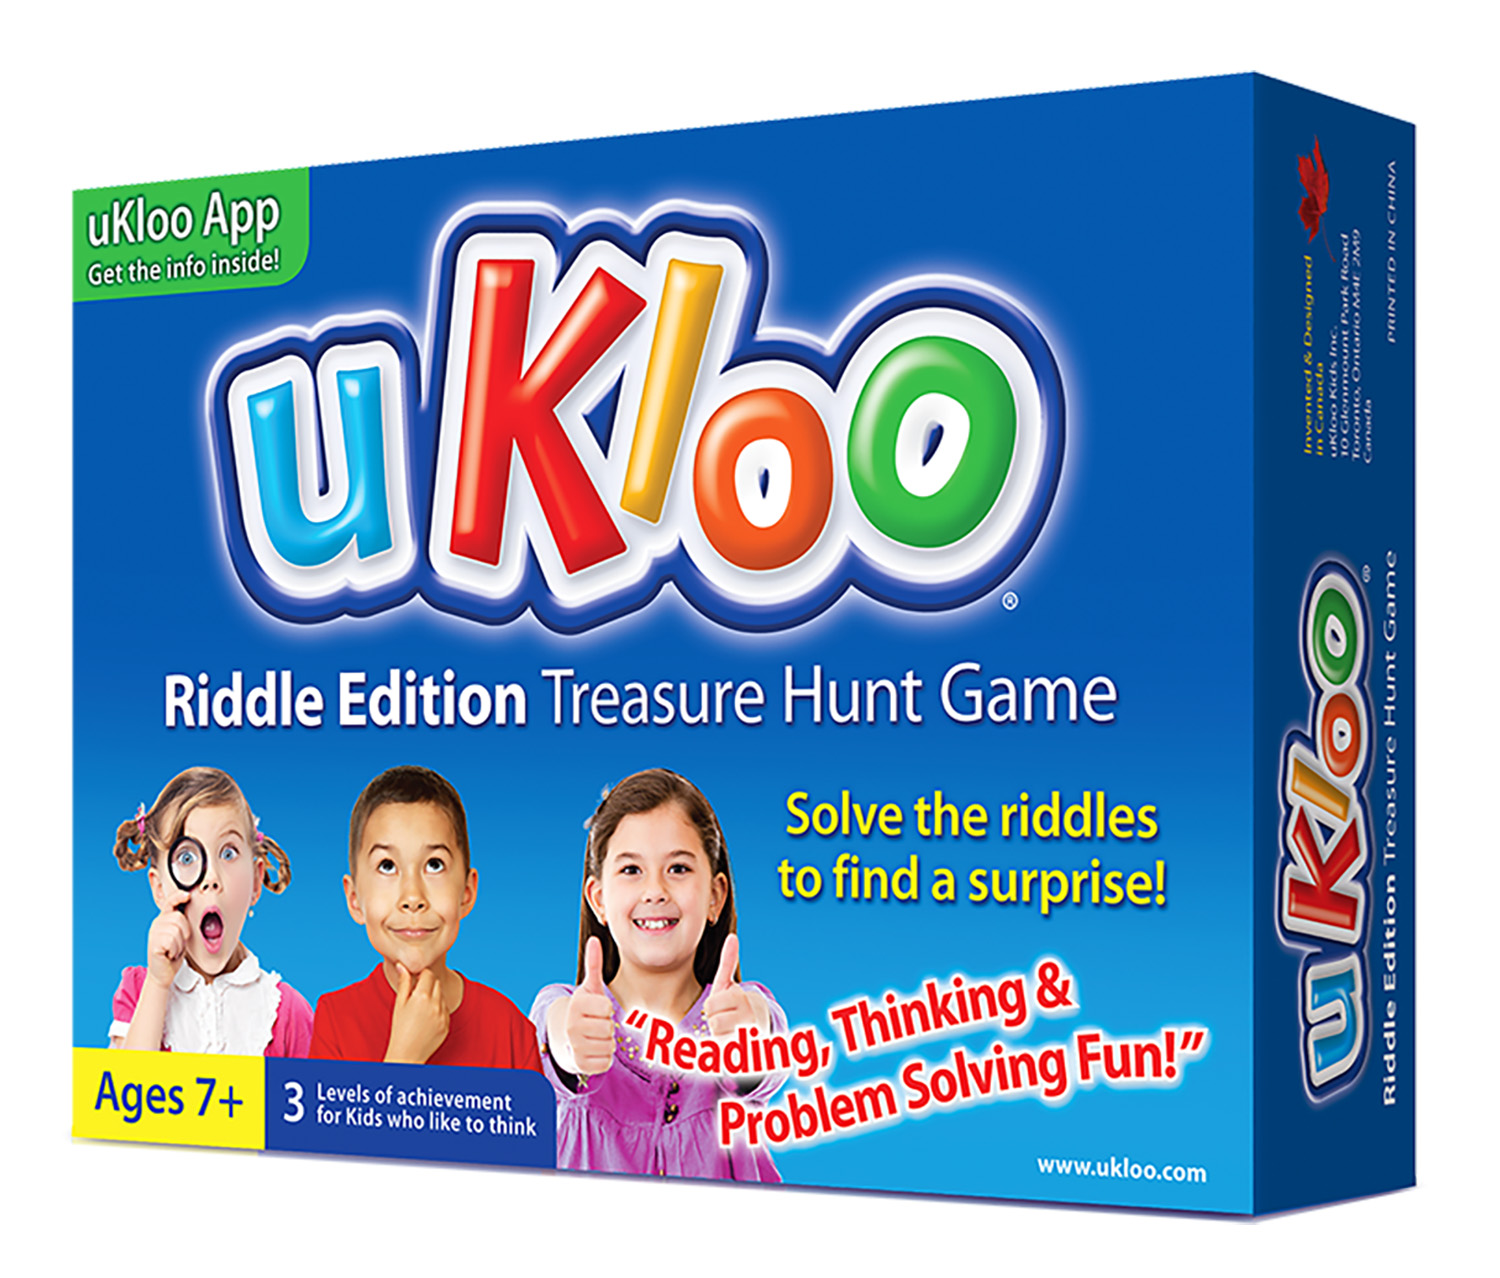 A box of the u kloo game.